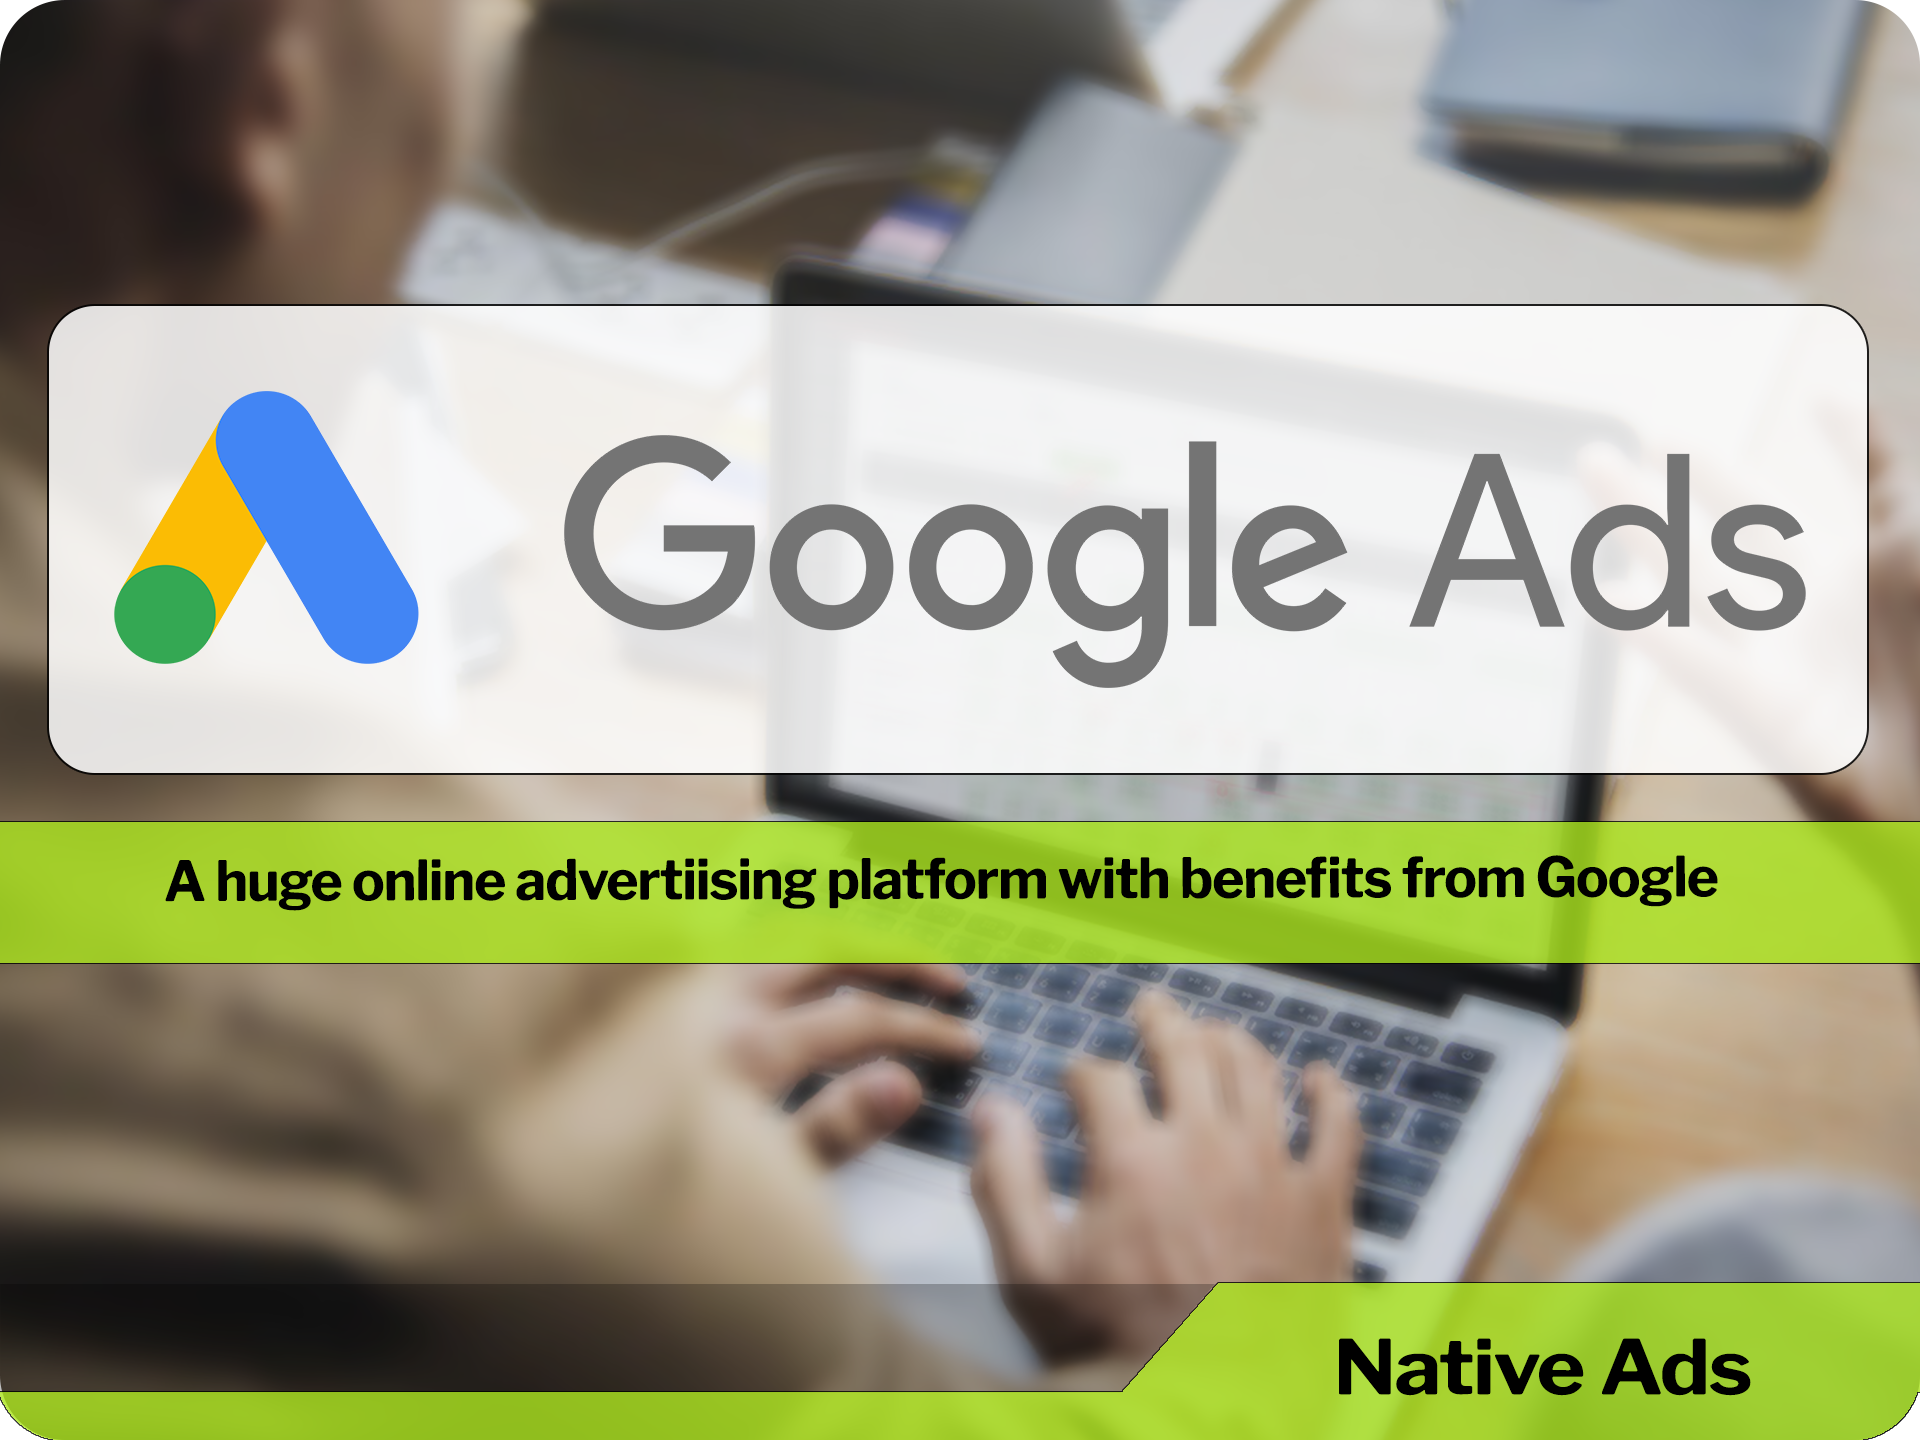 Benefits of Google Ads